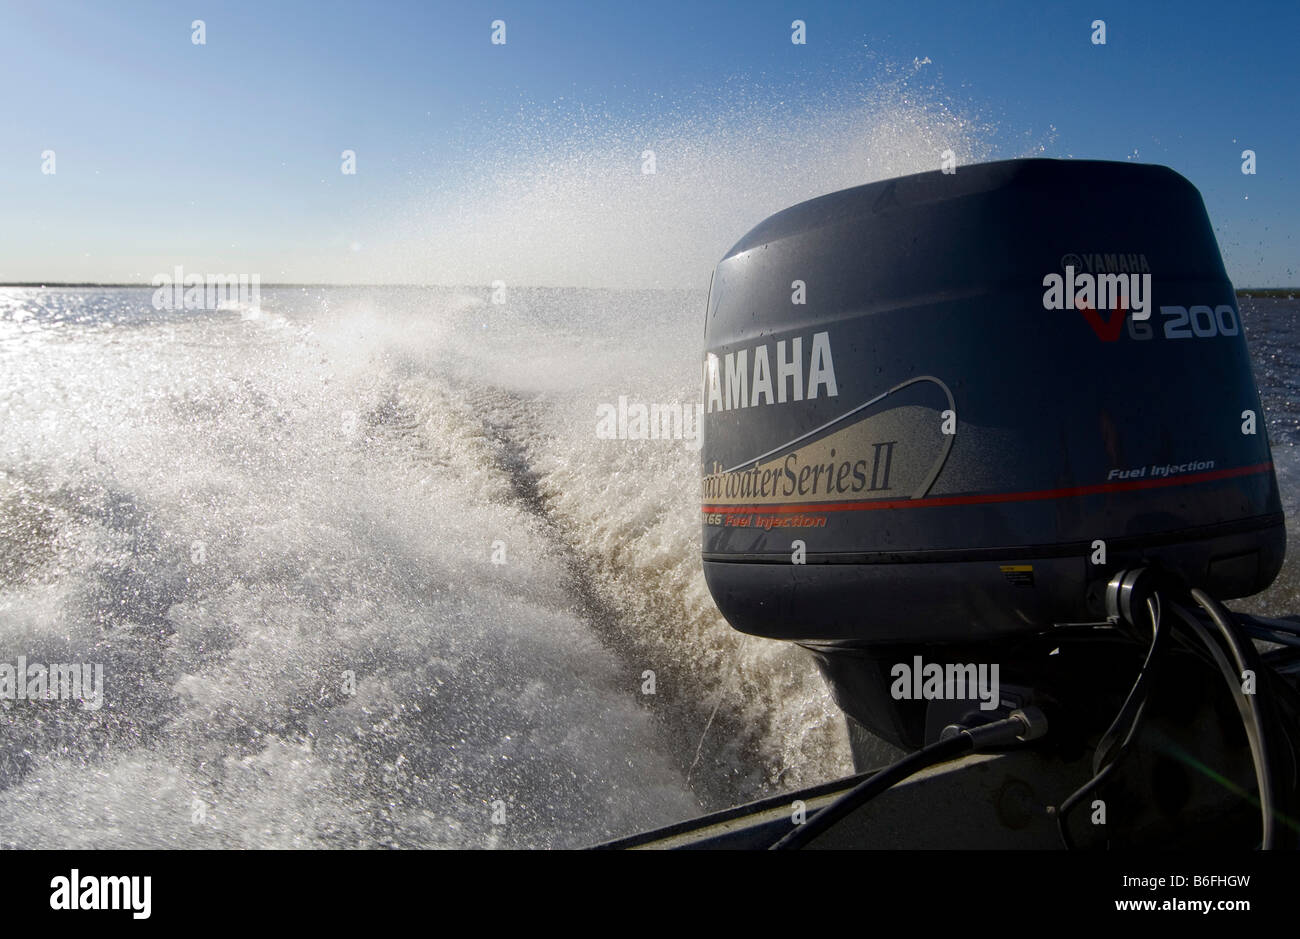 Yamaha motor on a boat, spraying water, Mackenzie River Delta, Northwest Territories, Canada, North America Stock Photo